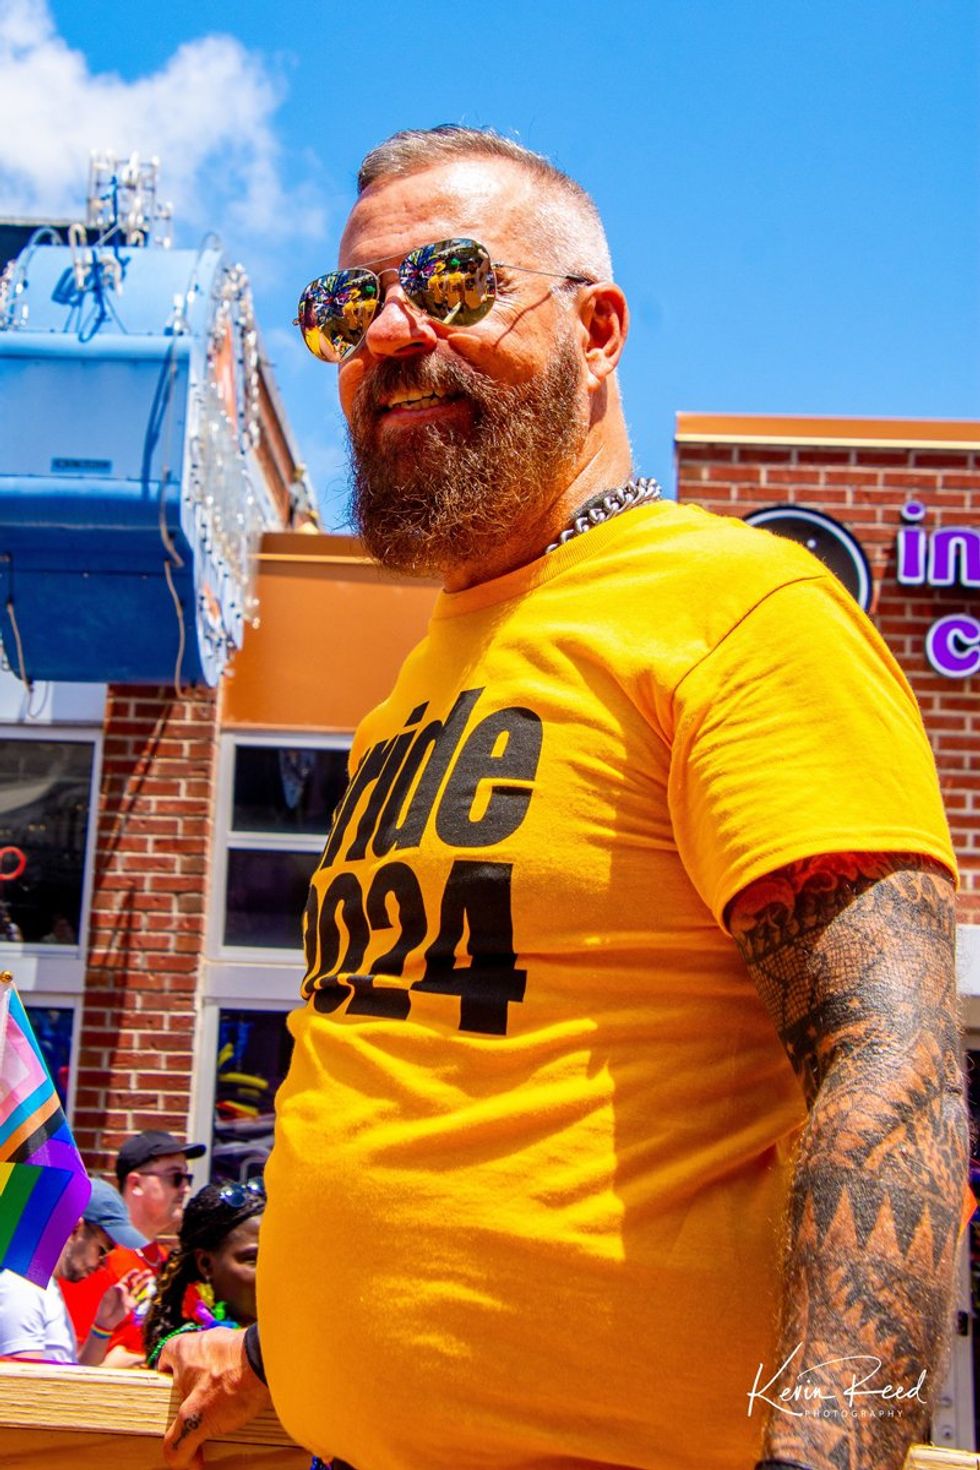 LGBTQ+ Pride Parade Festival Celebration Memphis Mid South Tennessee